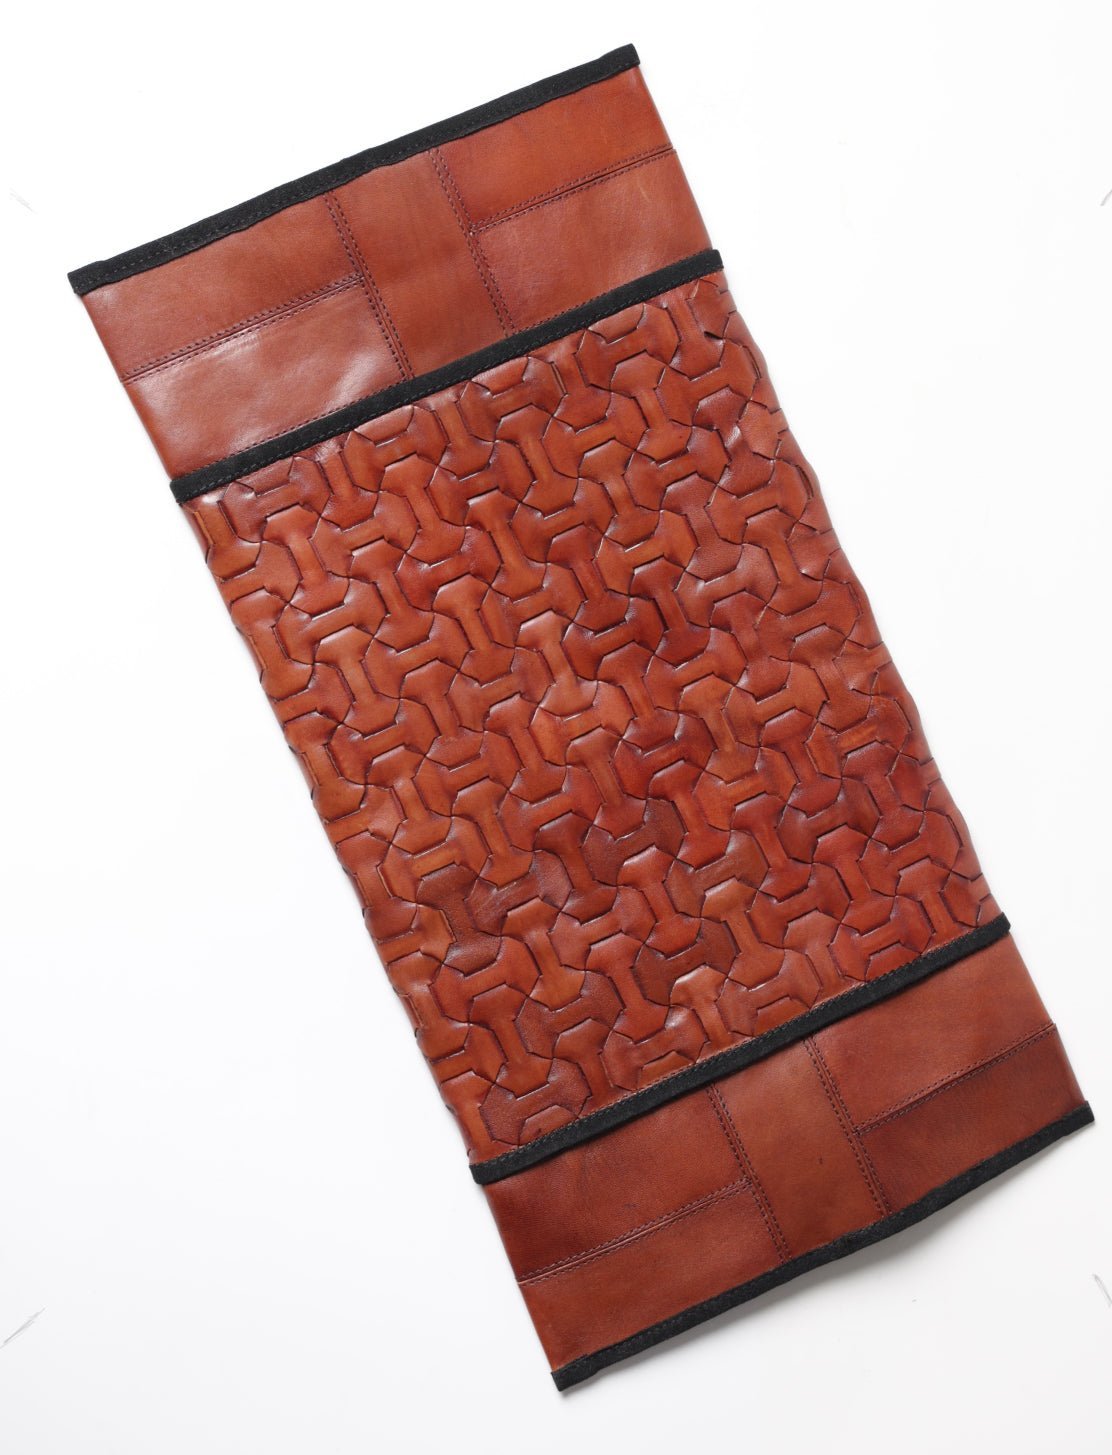 Tissue Box cover - Araani Design